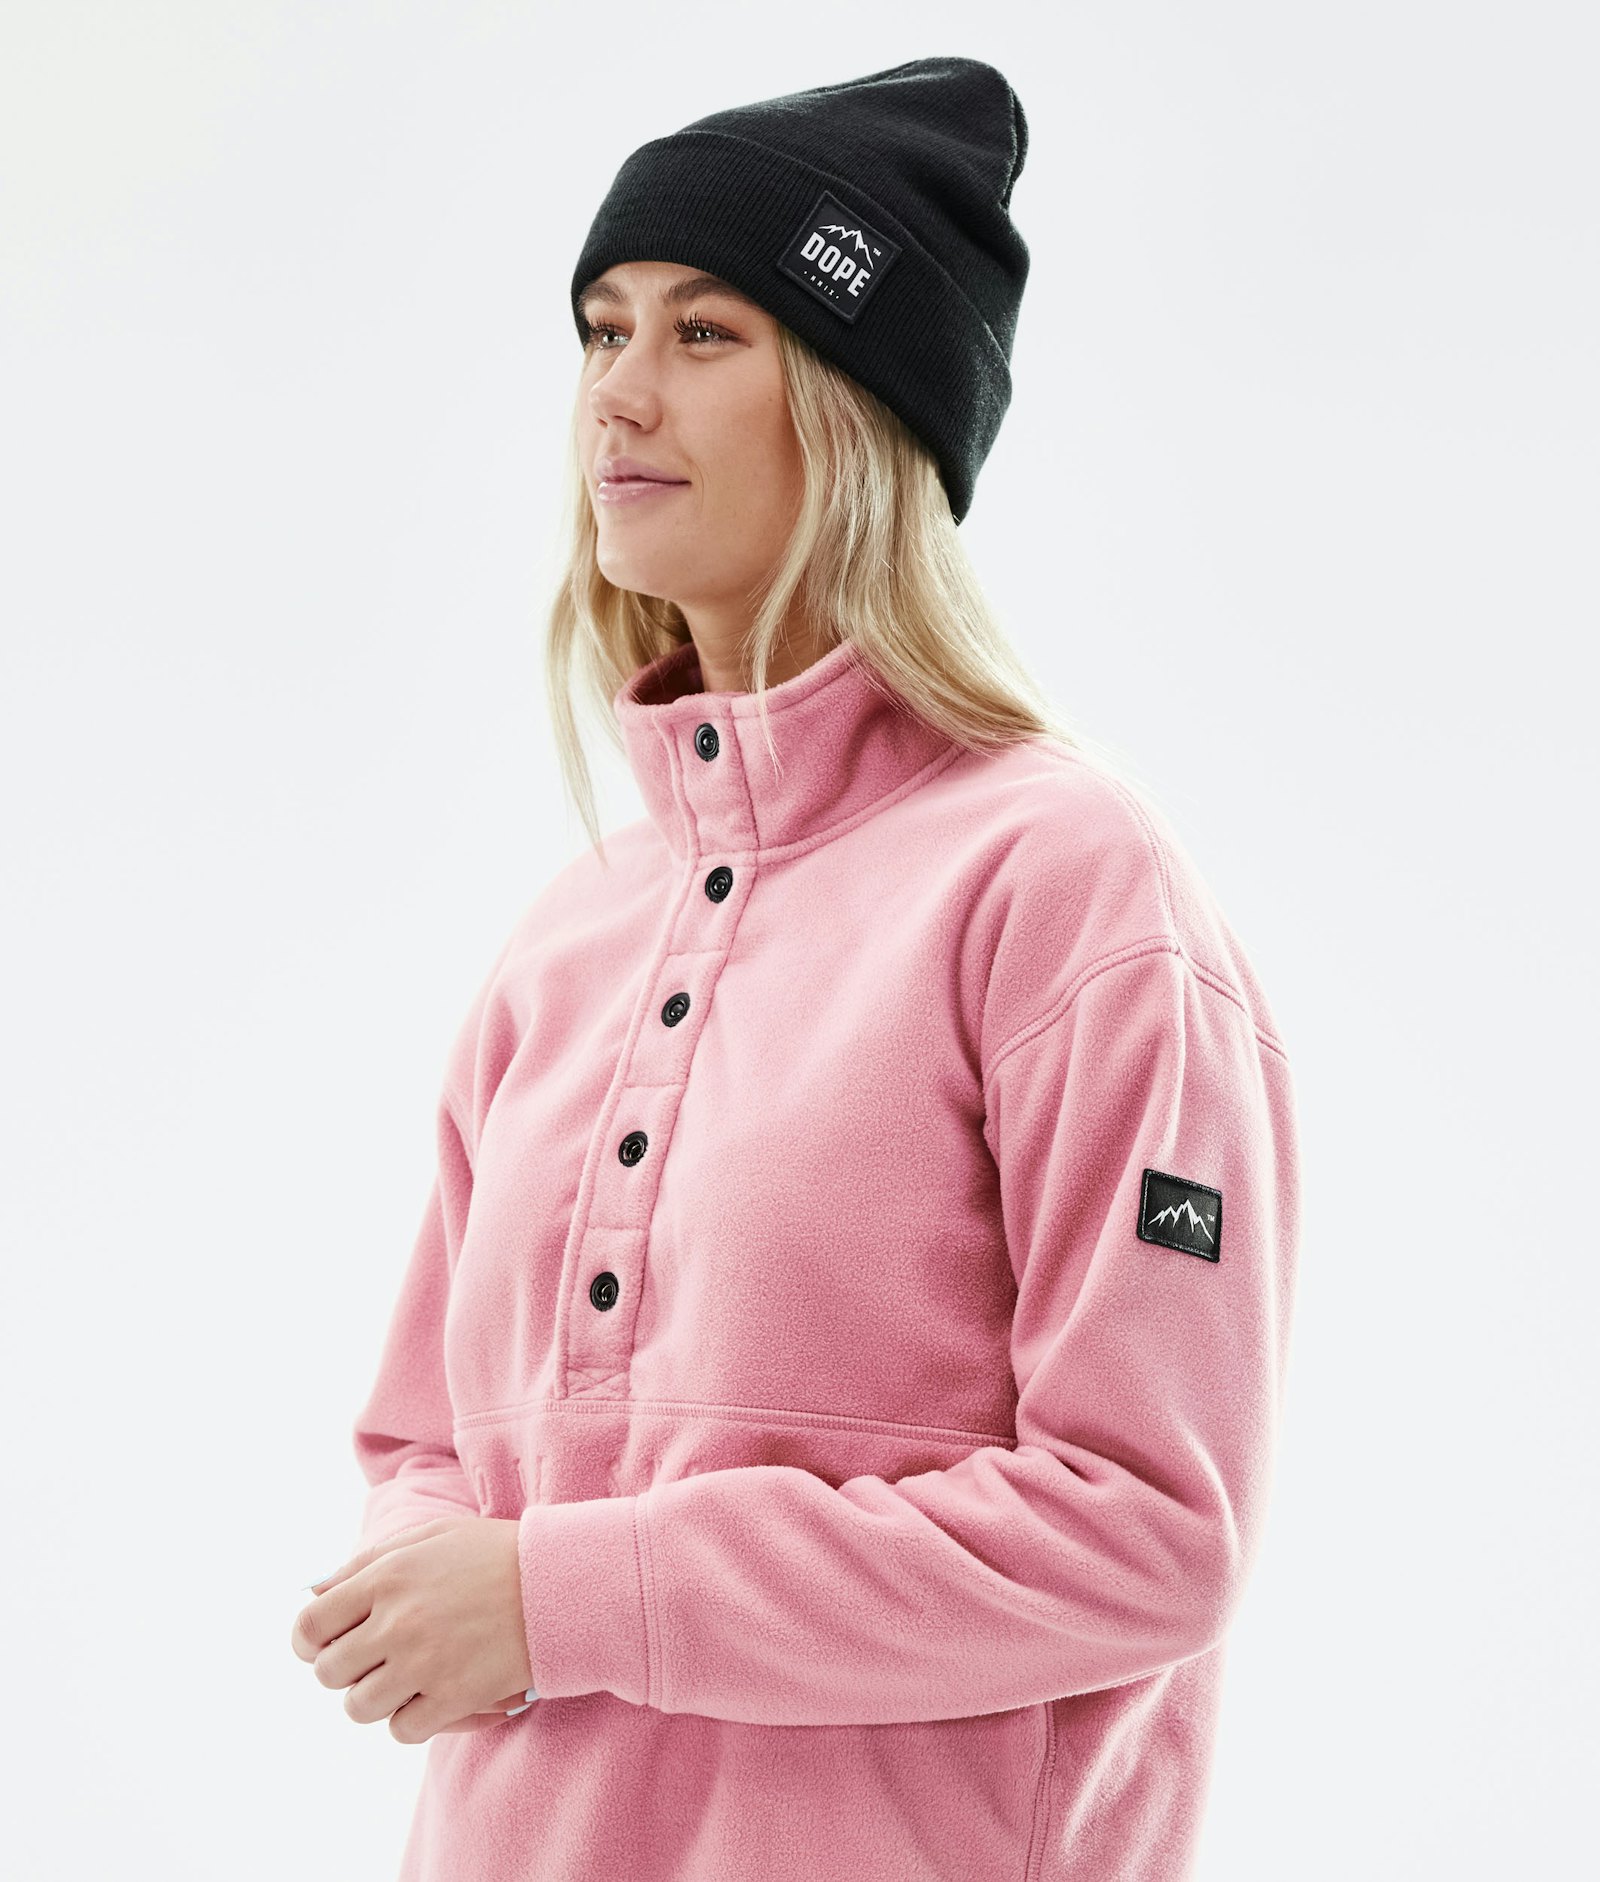 Dope Comfy W 2021 Fleece Sweater Women Pink